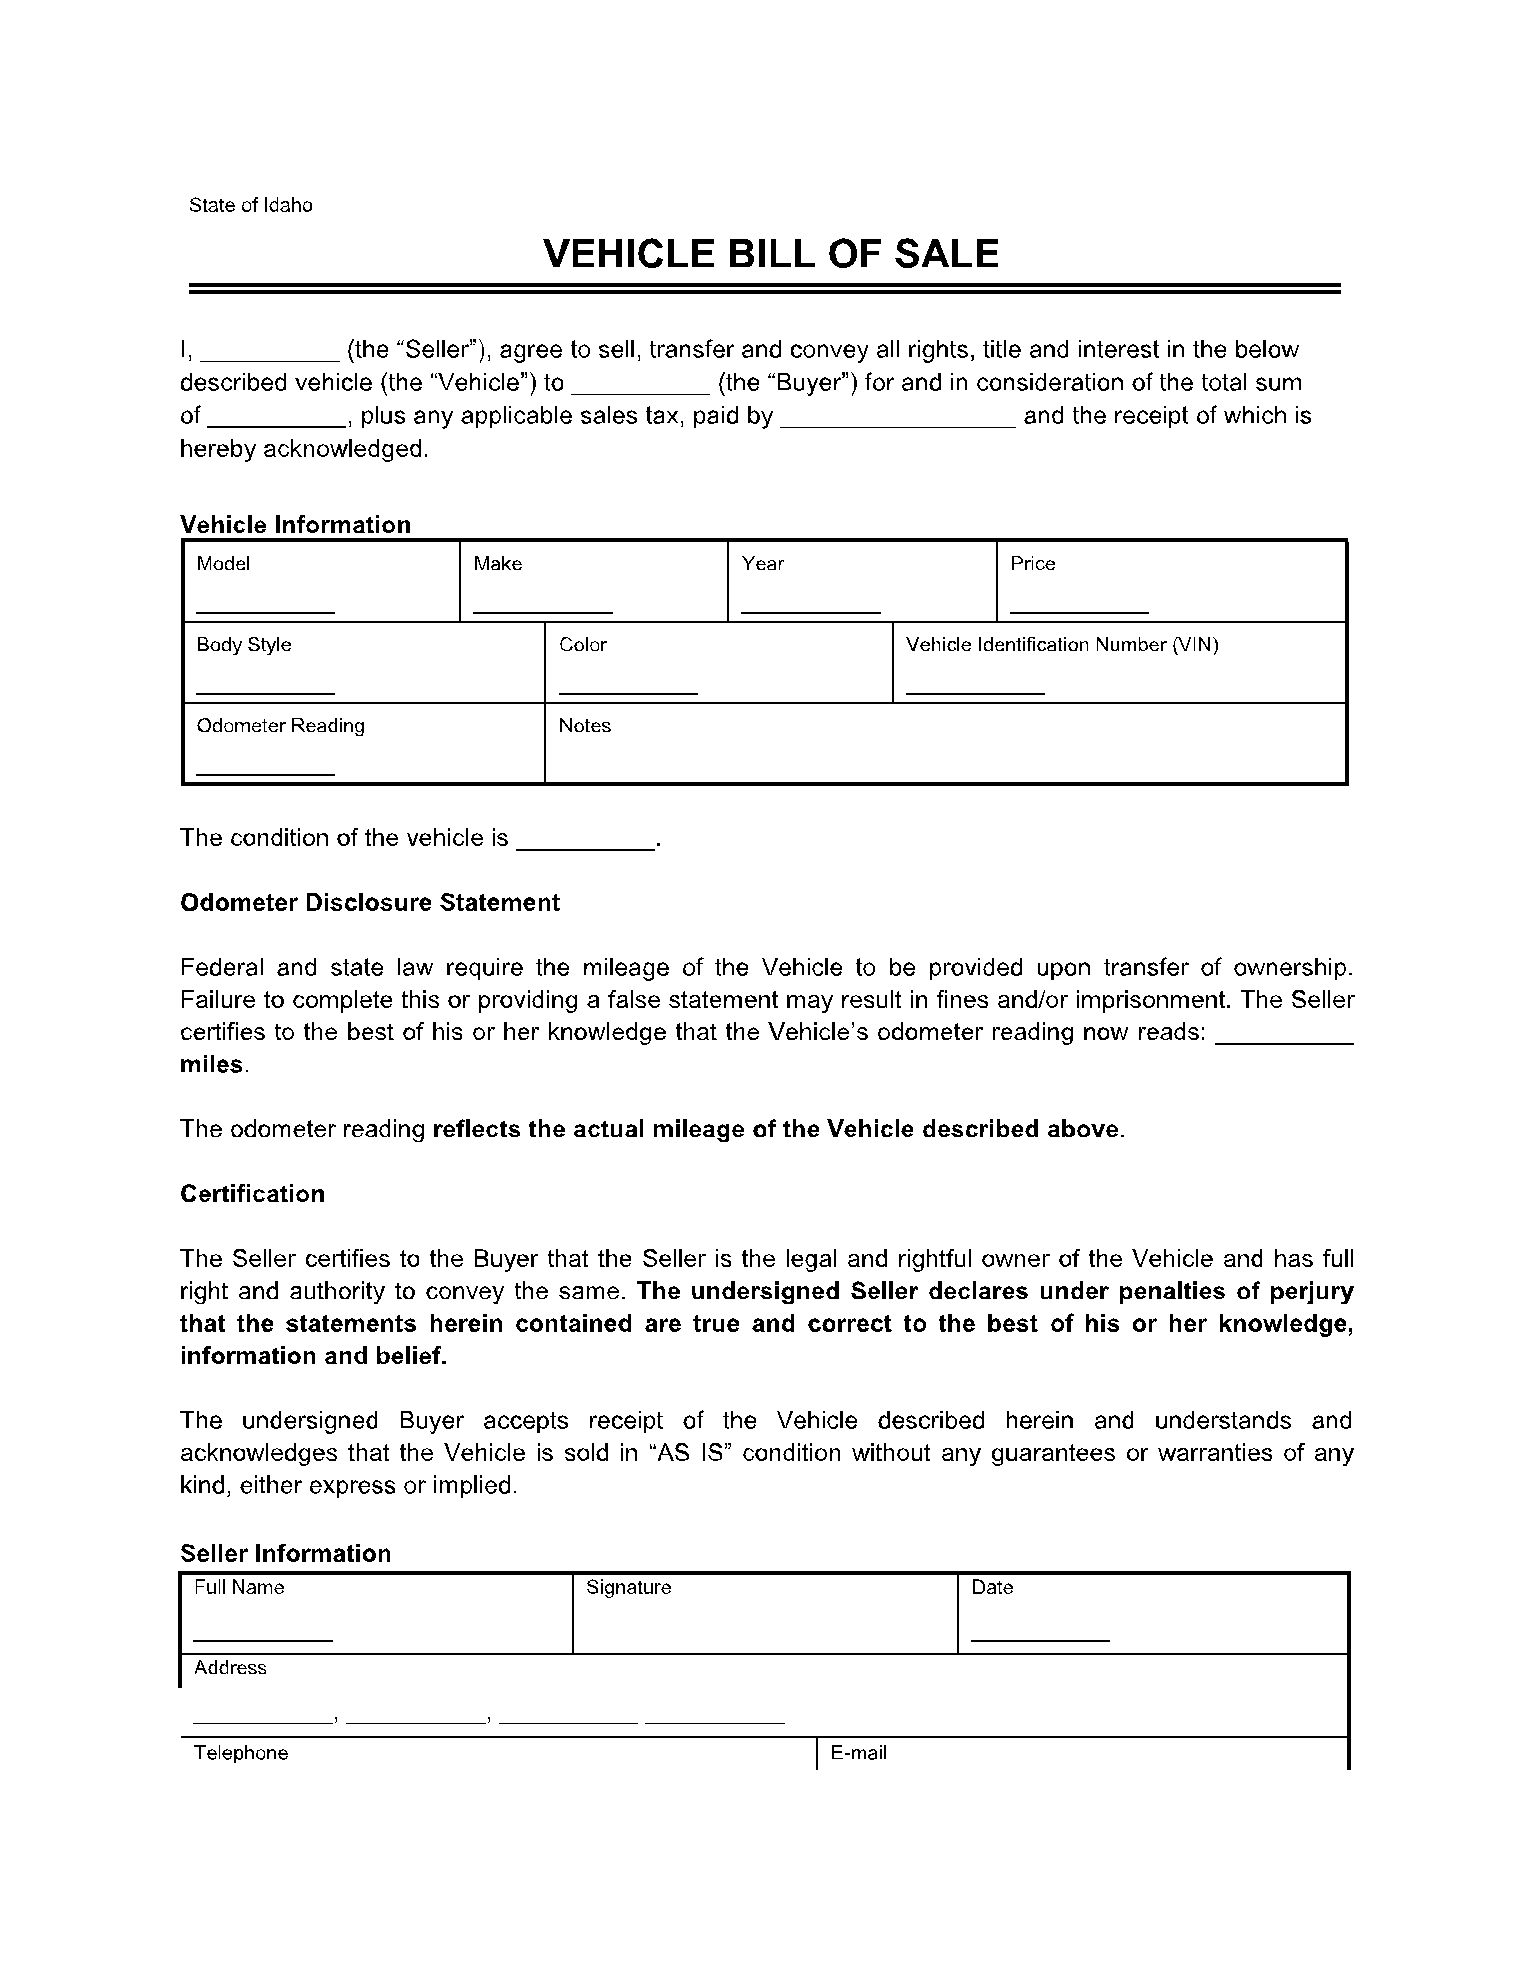 Idaho Vehicle Bill of Sale Form